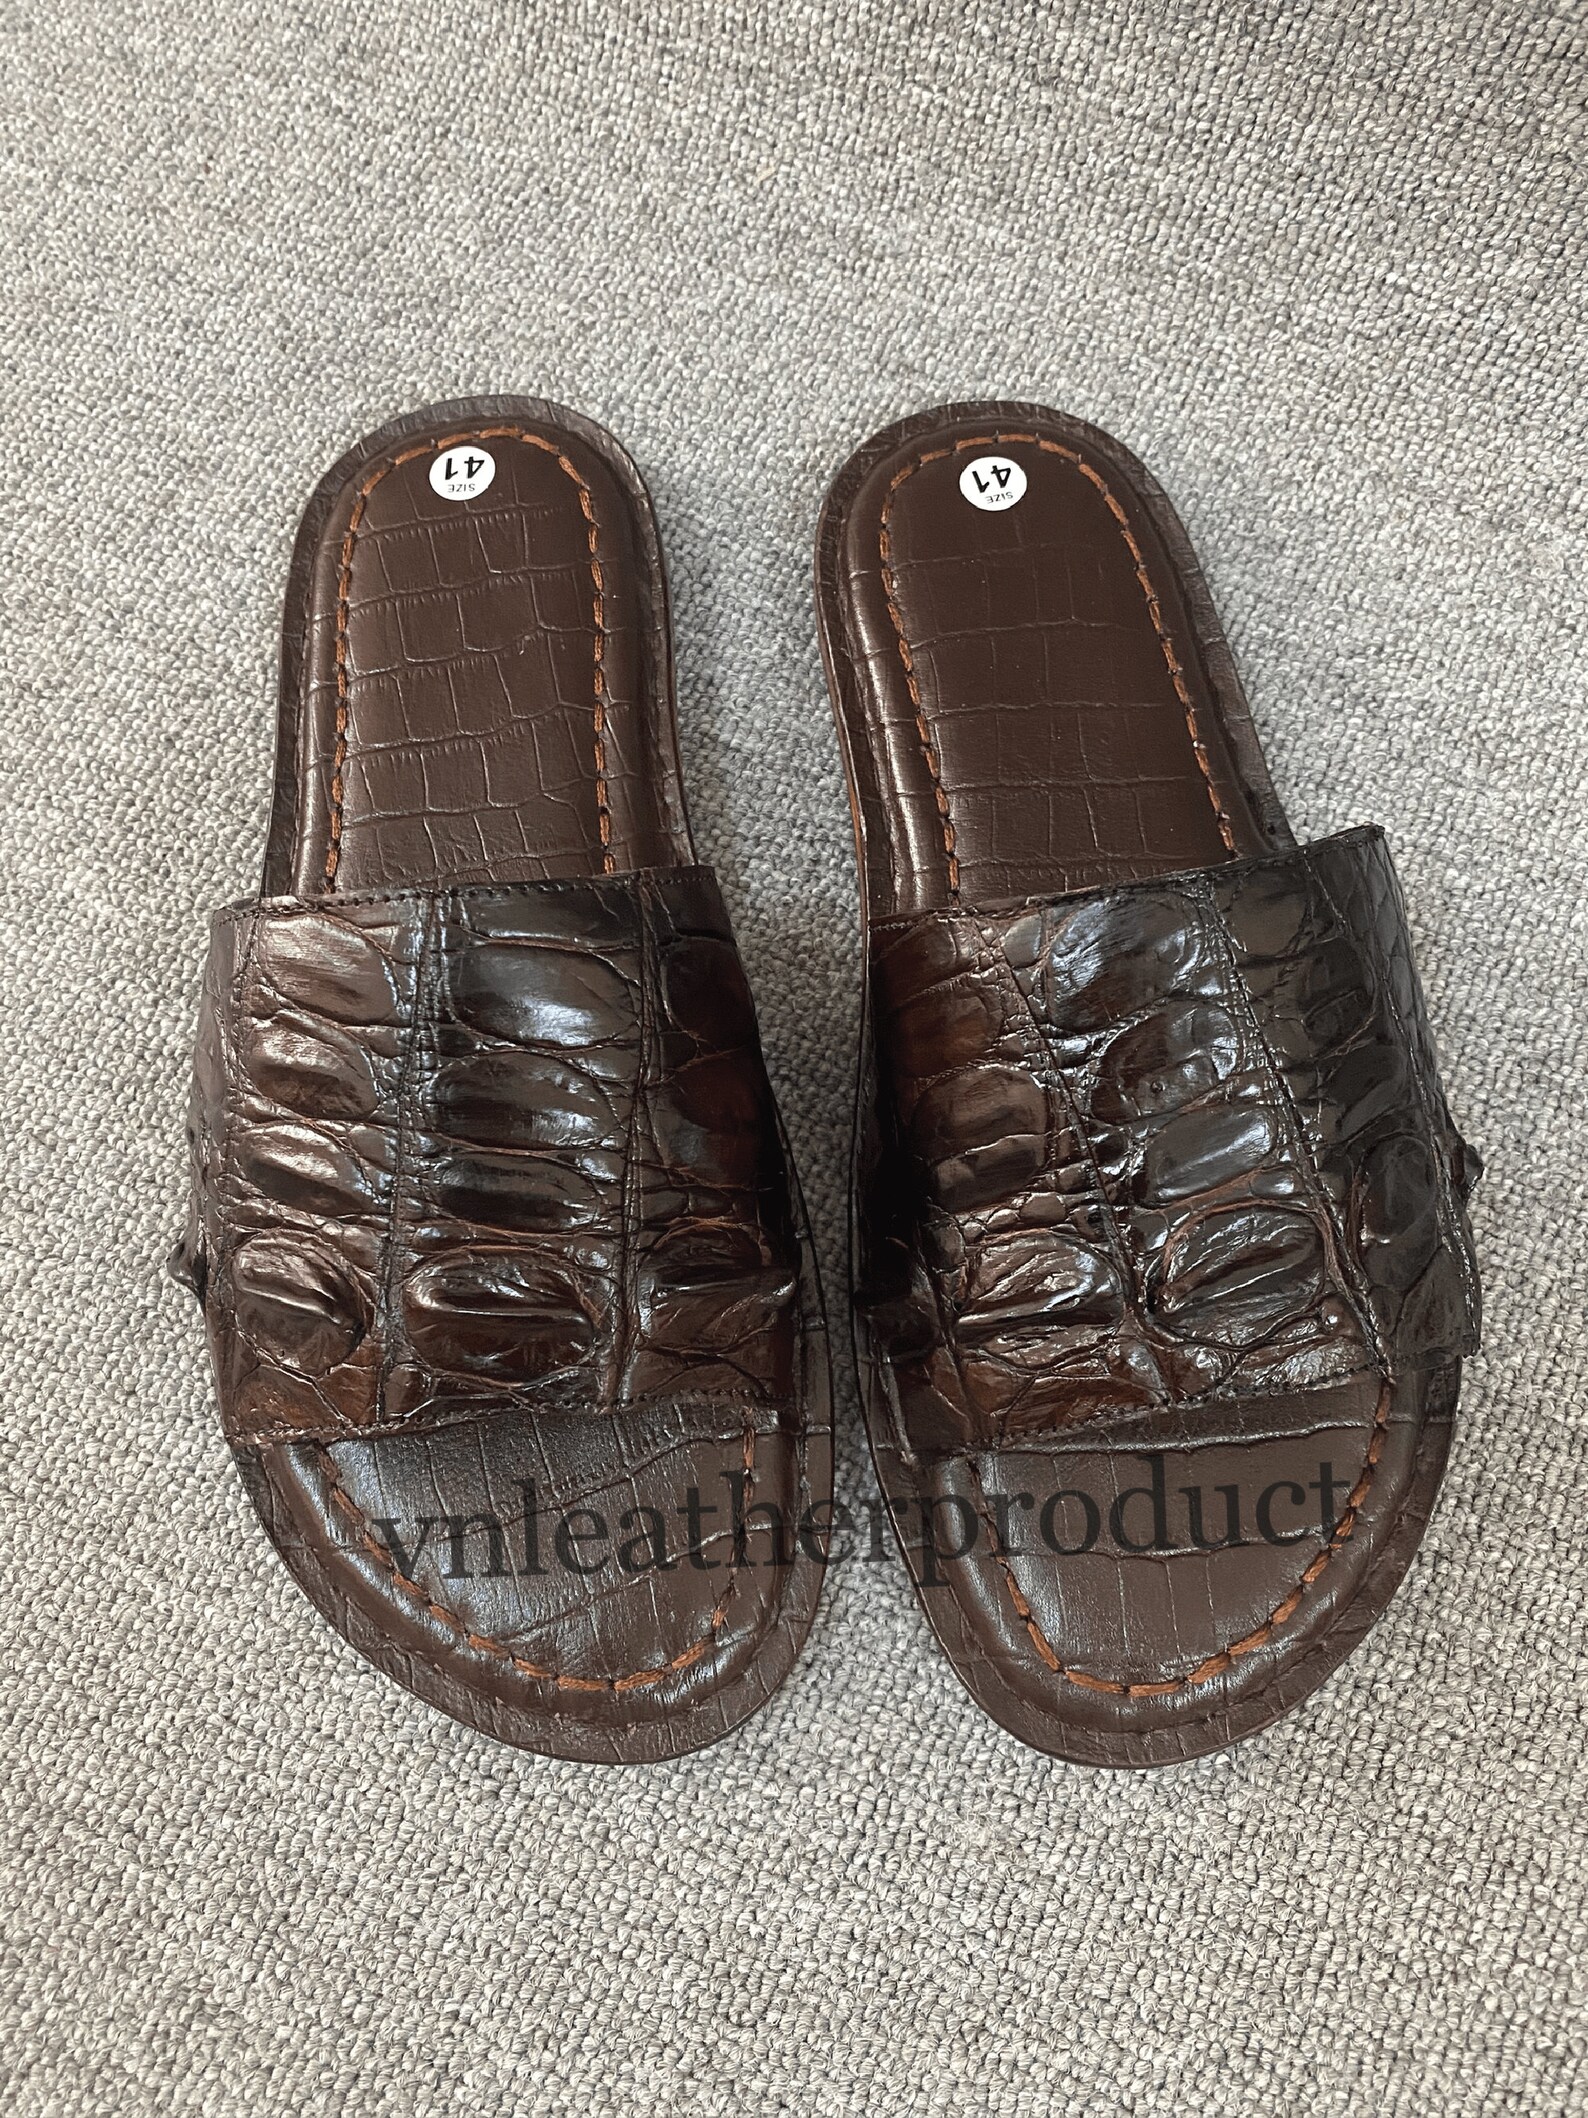 Genuine Alligator BELLY slippers leather/skin | Etsy